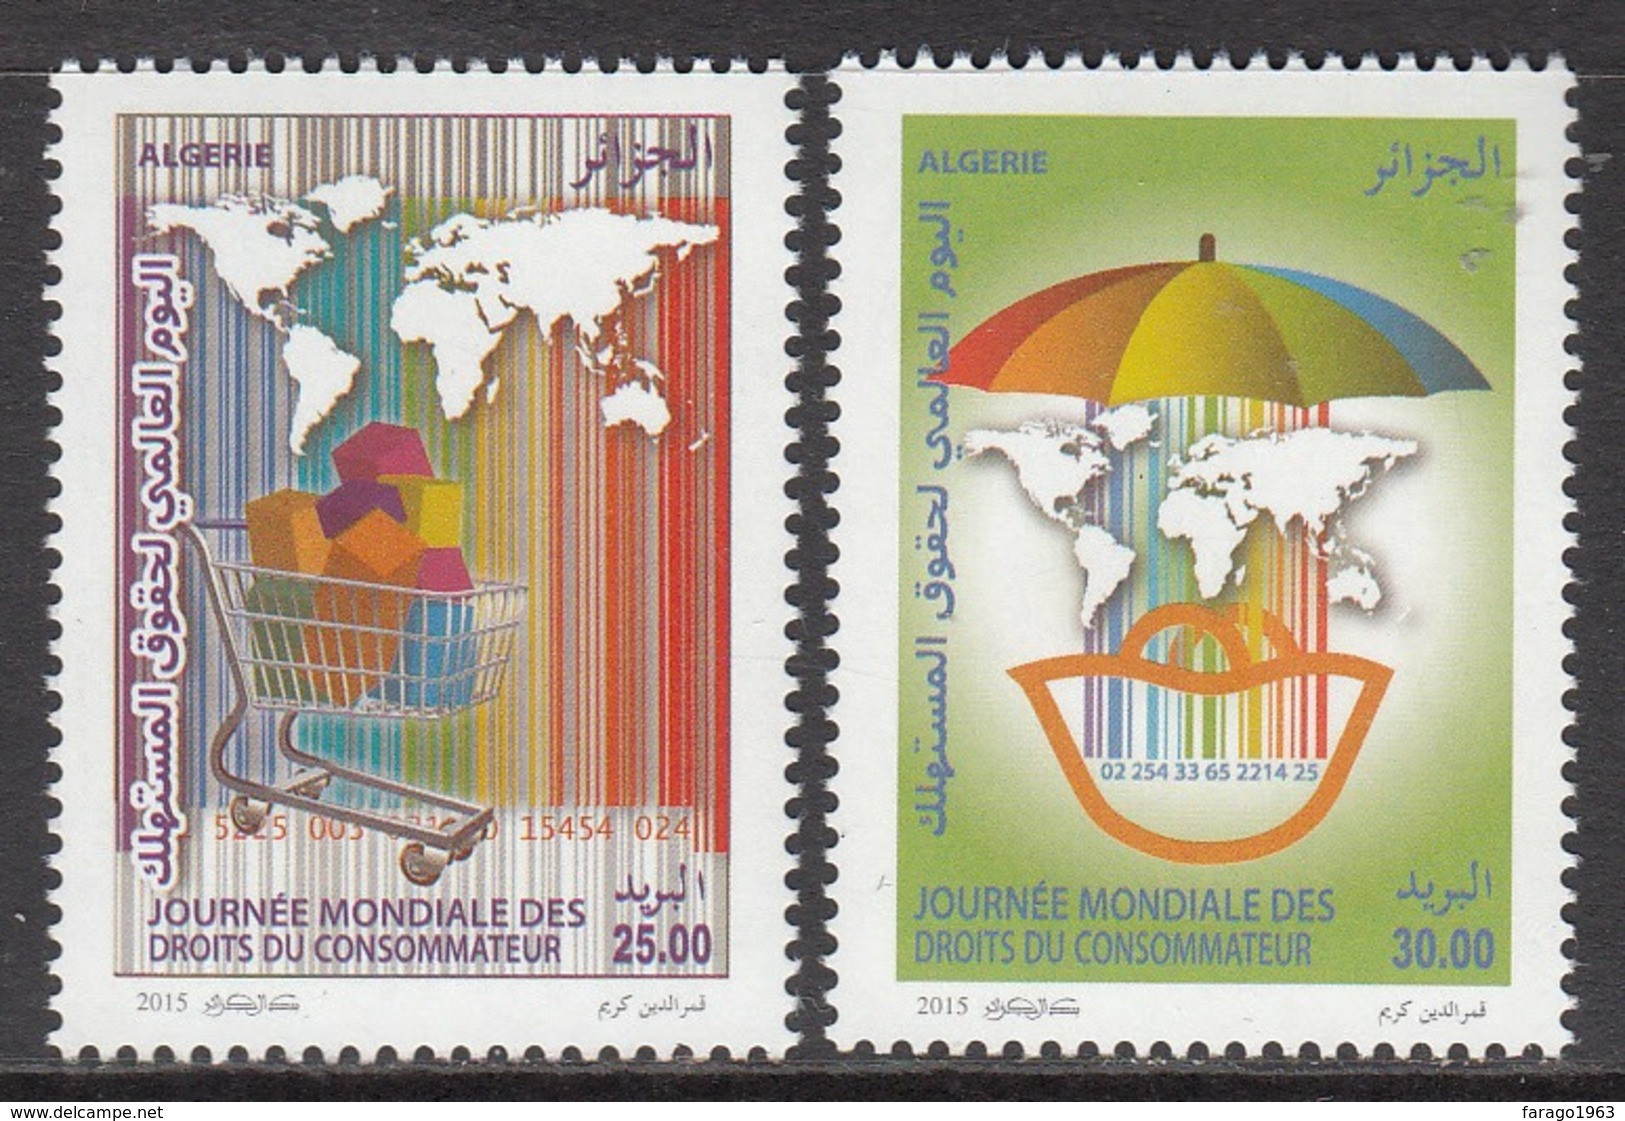 2015 Algeria Algerie Consumer Rights Complete Set Of 2 MNH - Algérie (1962-...)